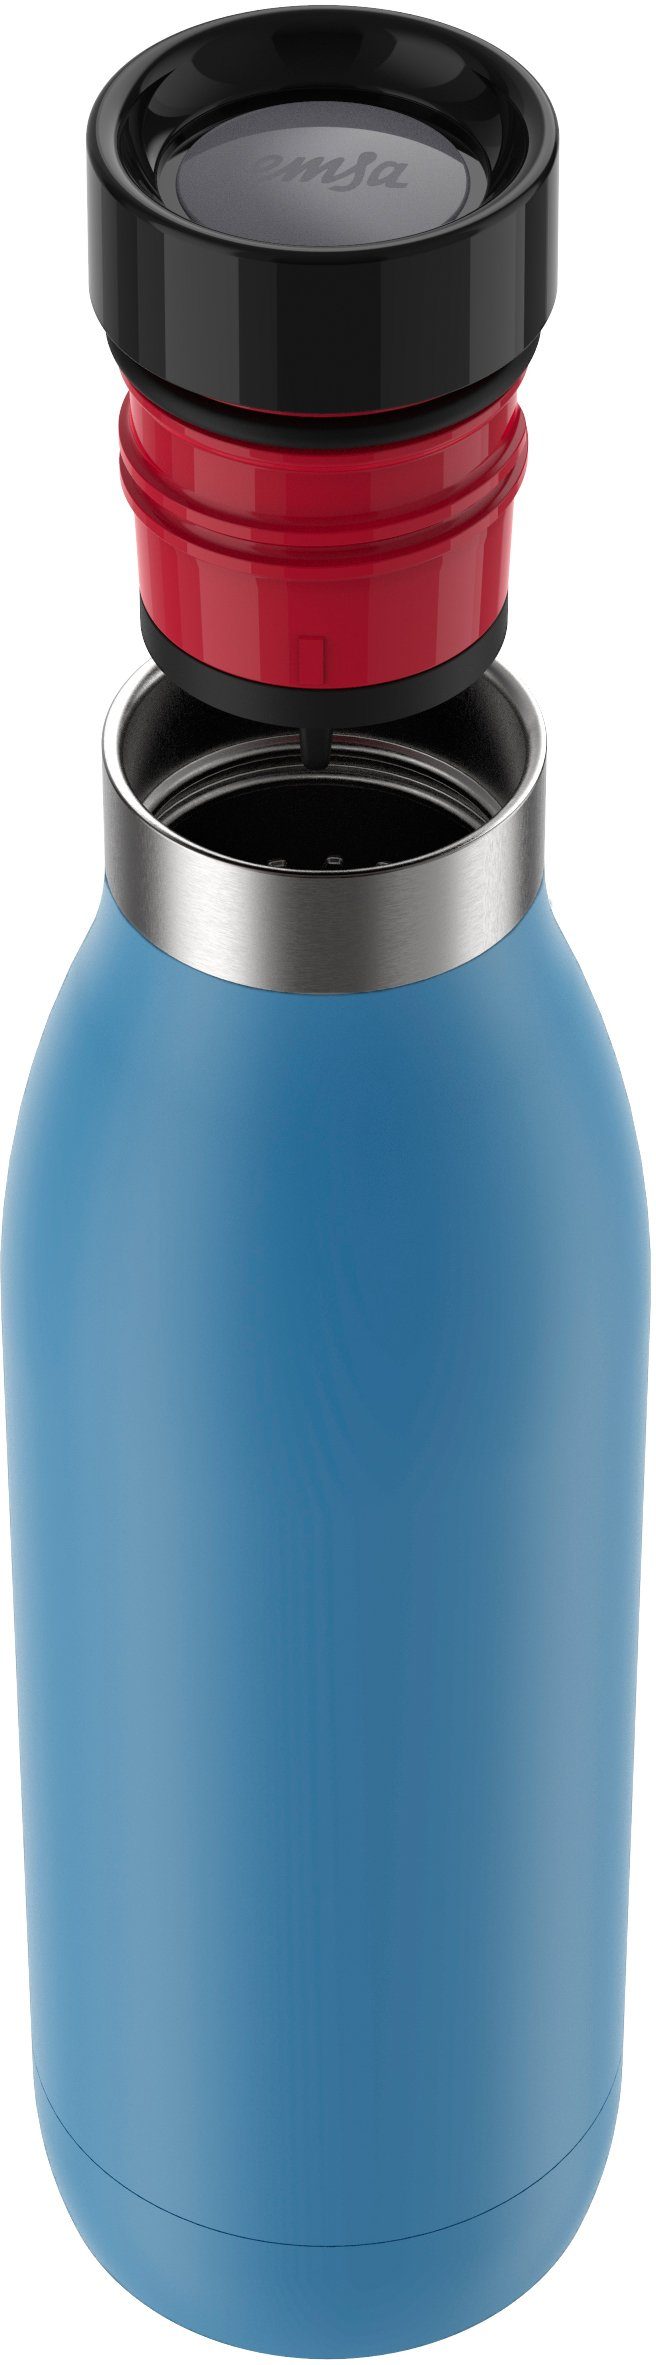 Emsa Trinkflasche warm/24h aquablau 12h Edelstahl, spülmaschinenfest Bludrop Quick-Press Deckel, kühl, Color